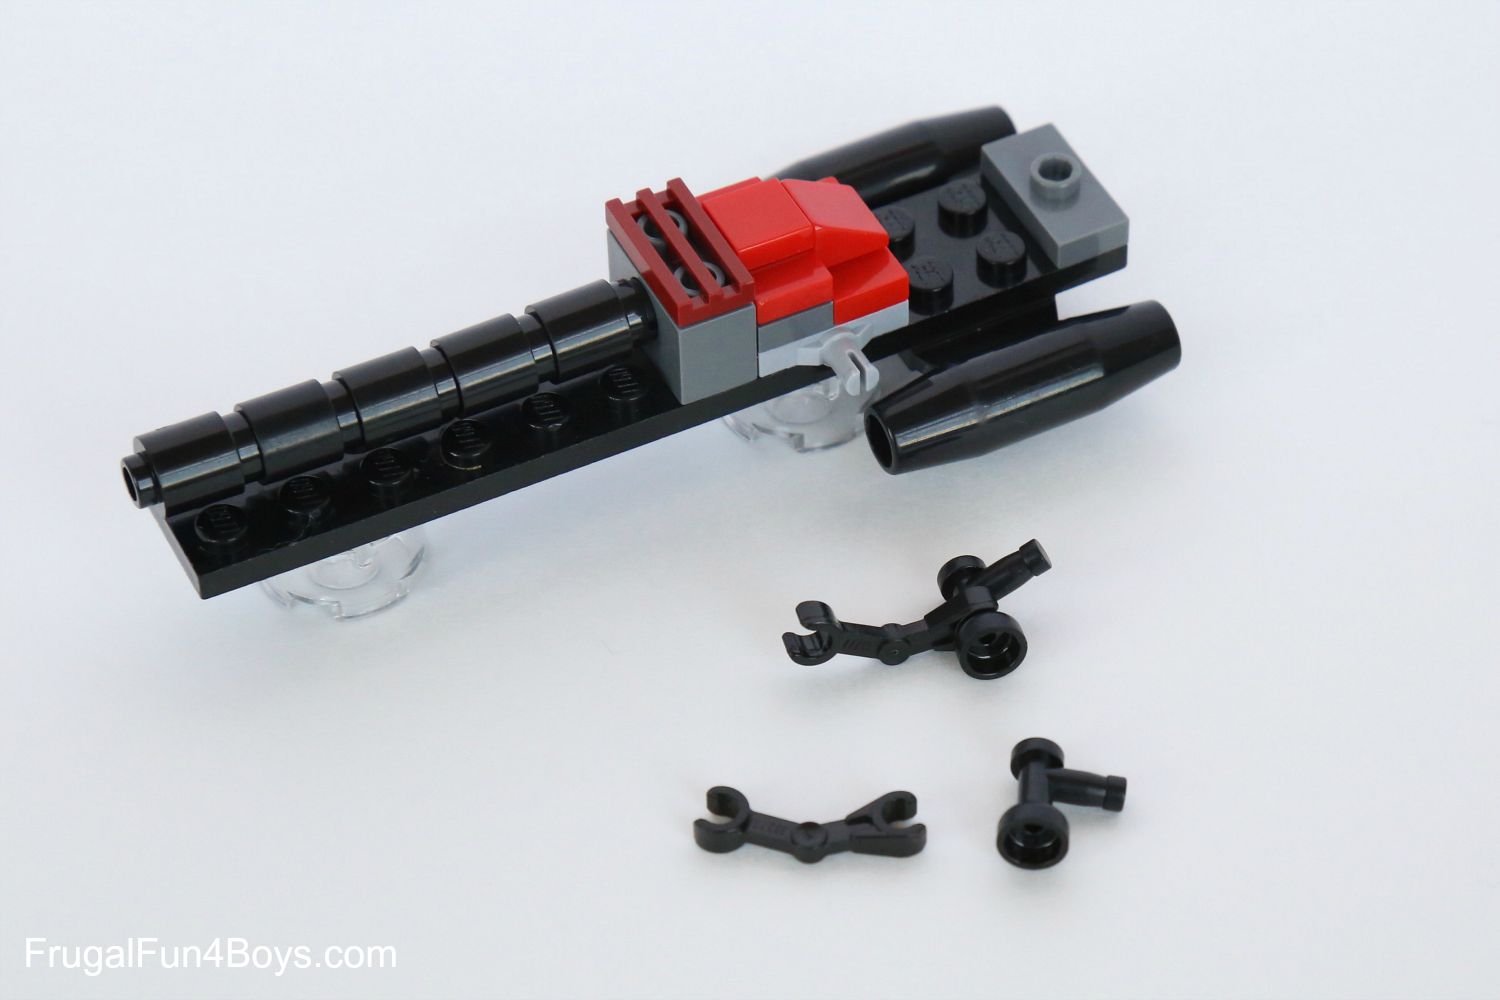 How to Build a LEGO Star Wars Speeder